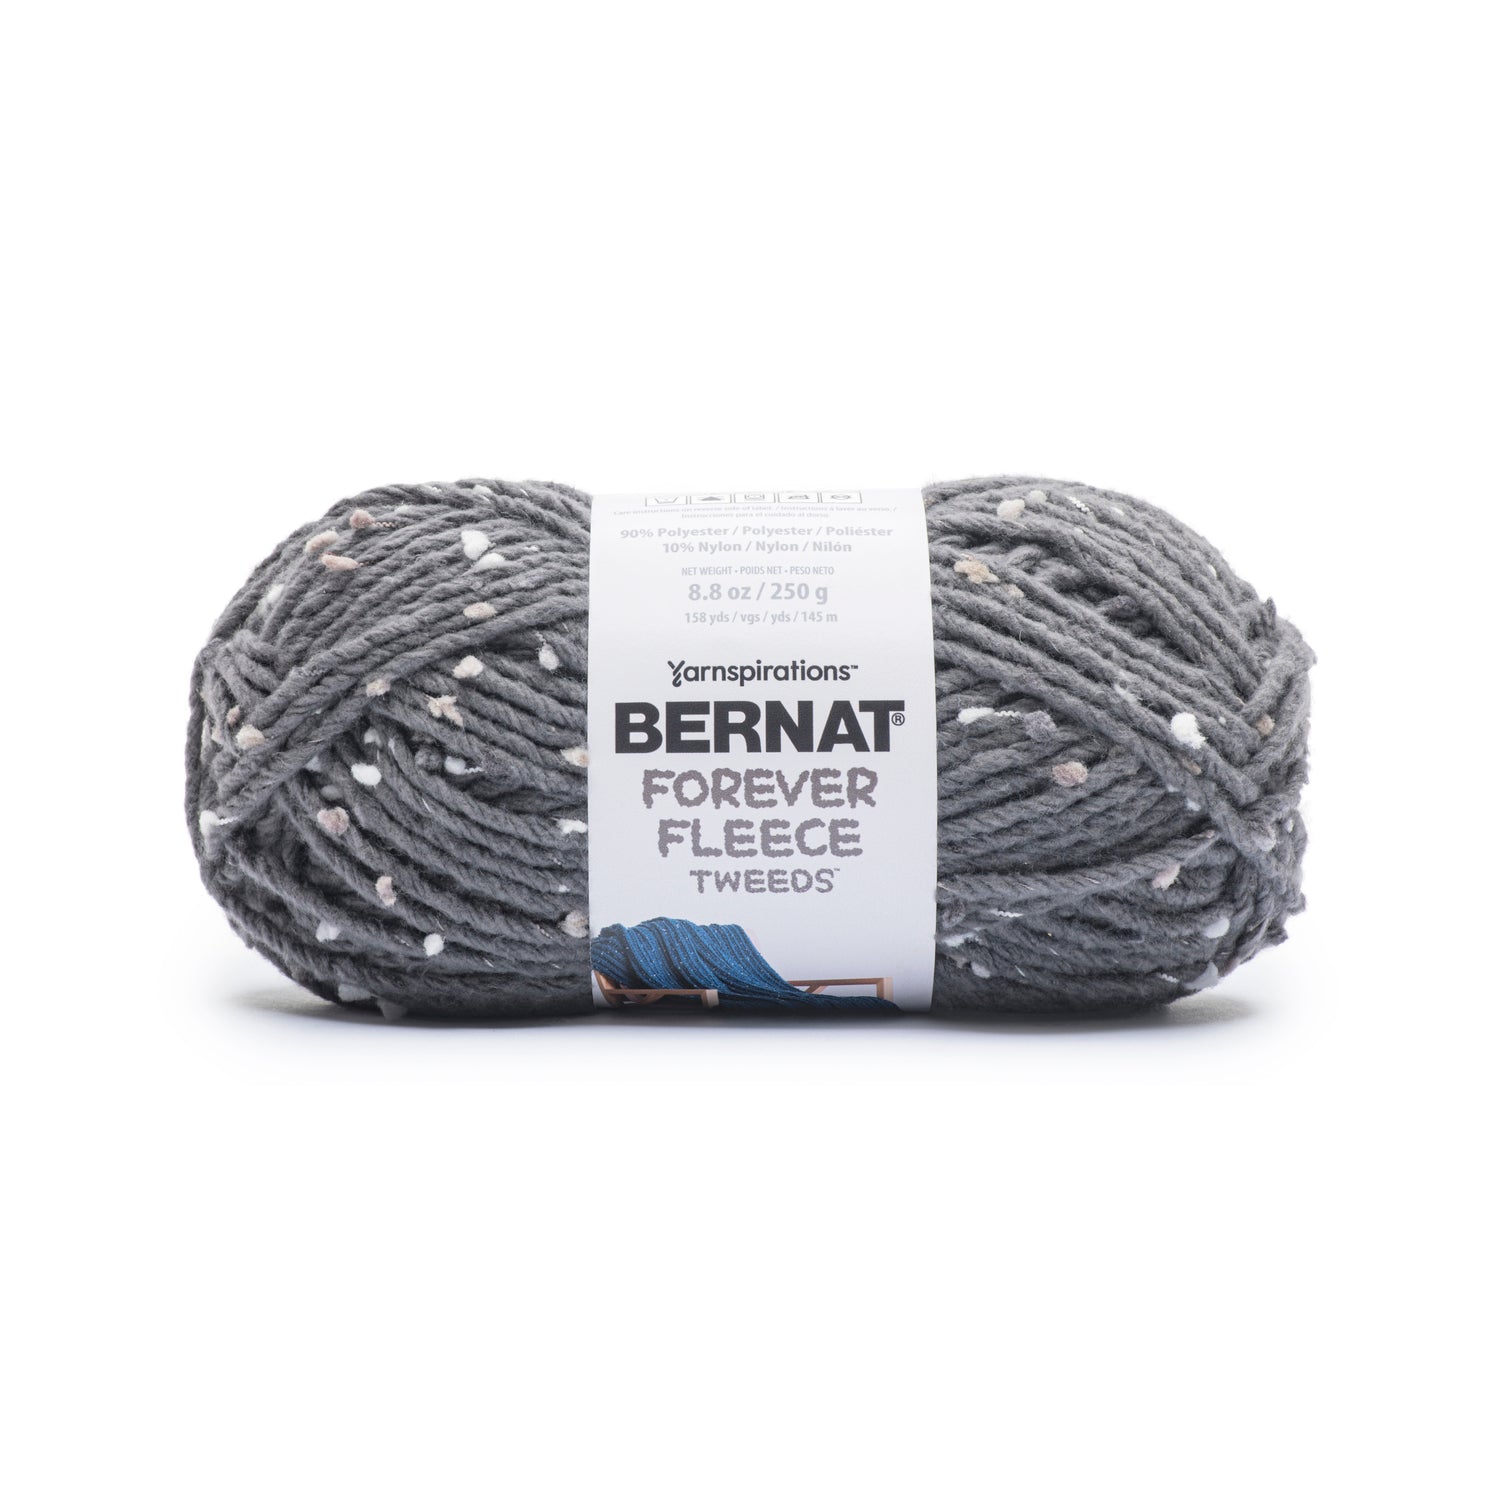 Bernat Forever Fleece Tweeds Yarn (250g/8.8oz) Coal Tweed